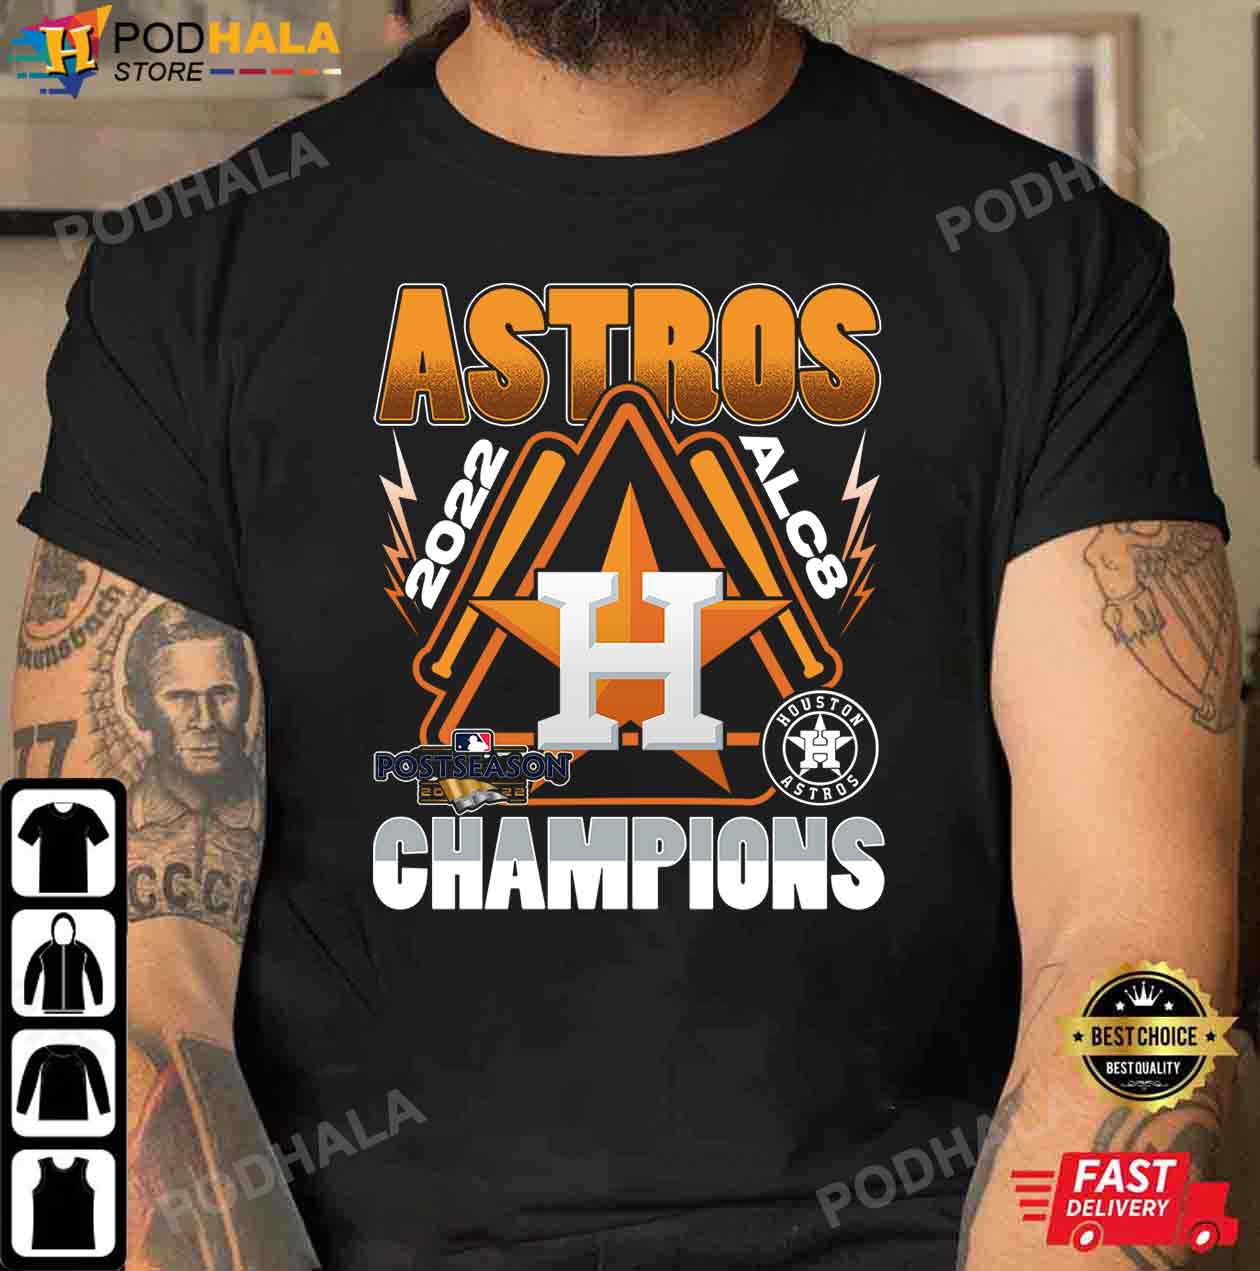 astros world series championships gear